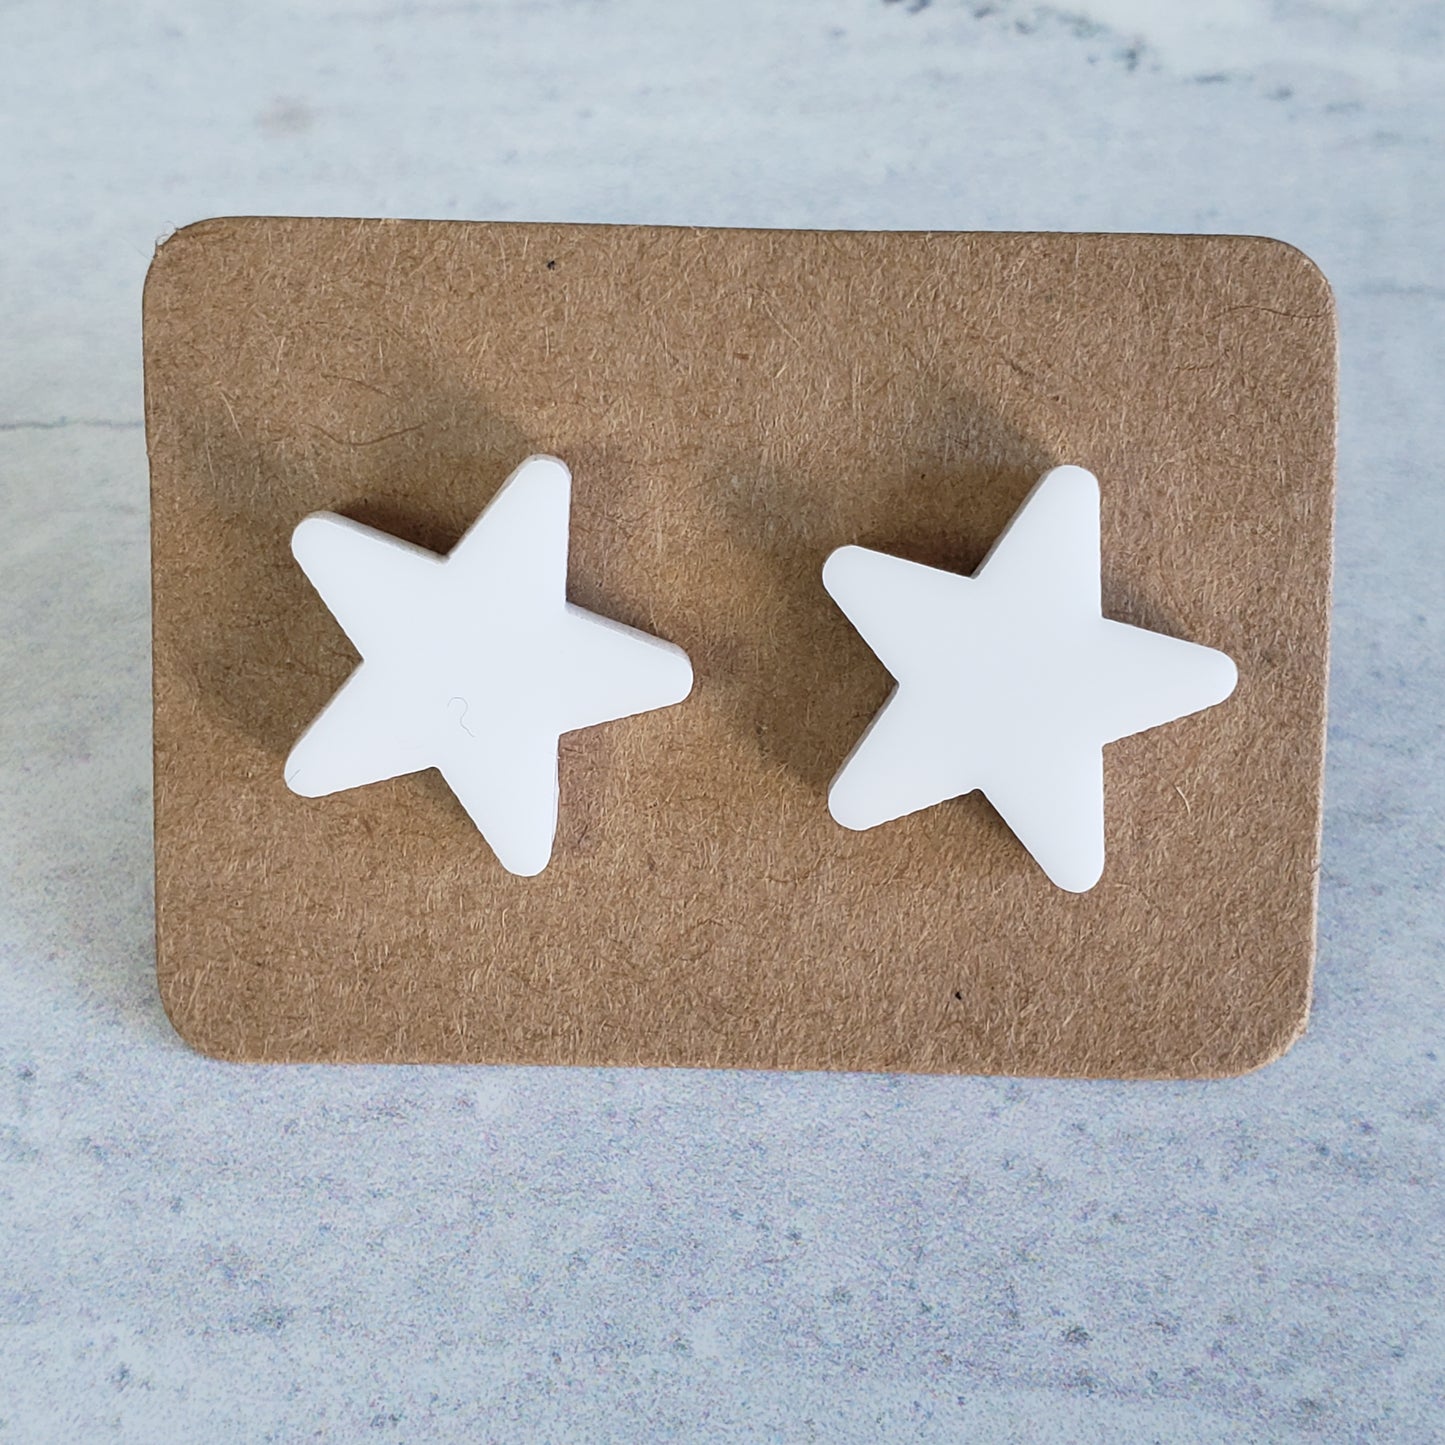 White stud star earrings on earring card